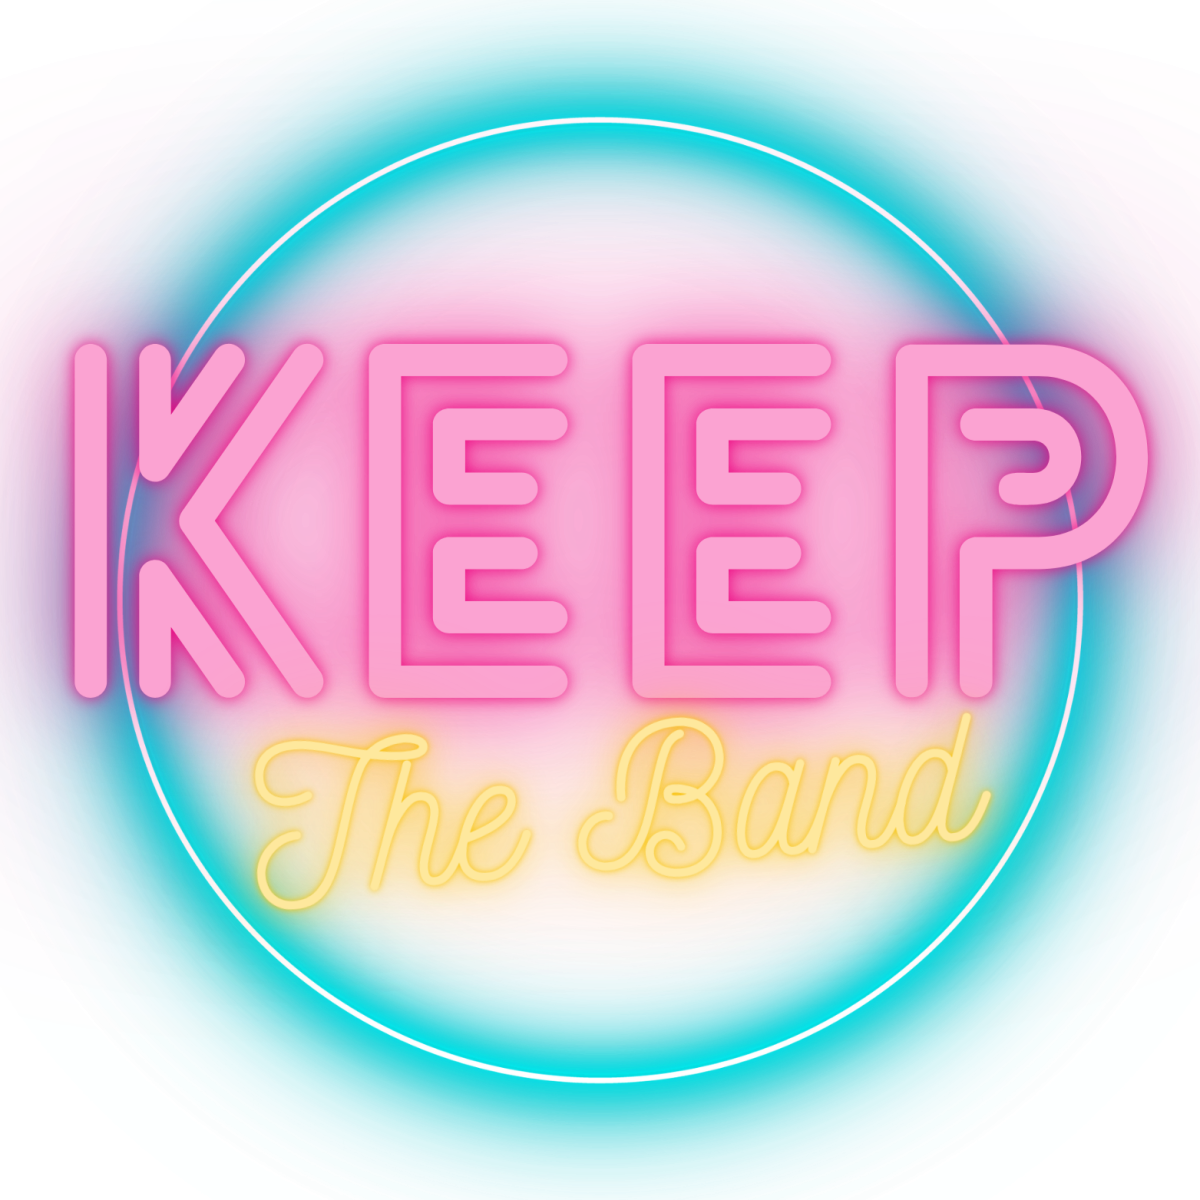 Keep the band - Agenda